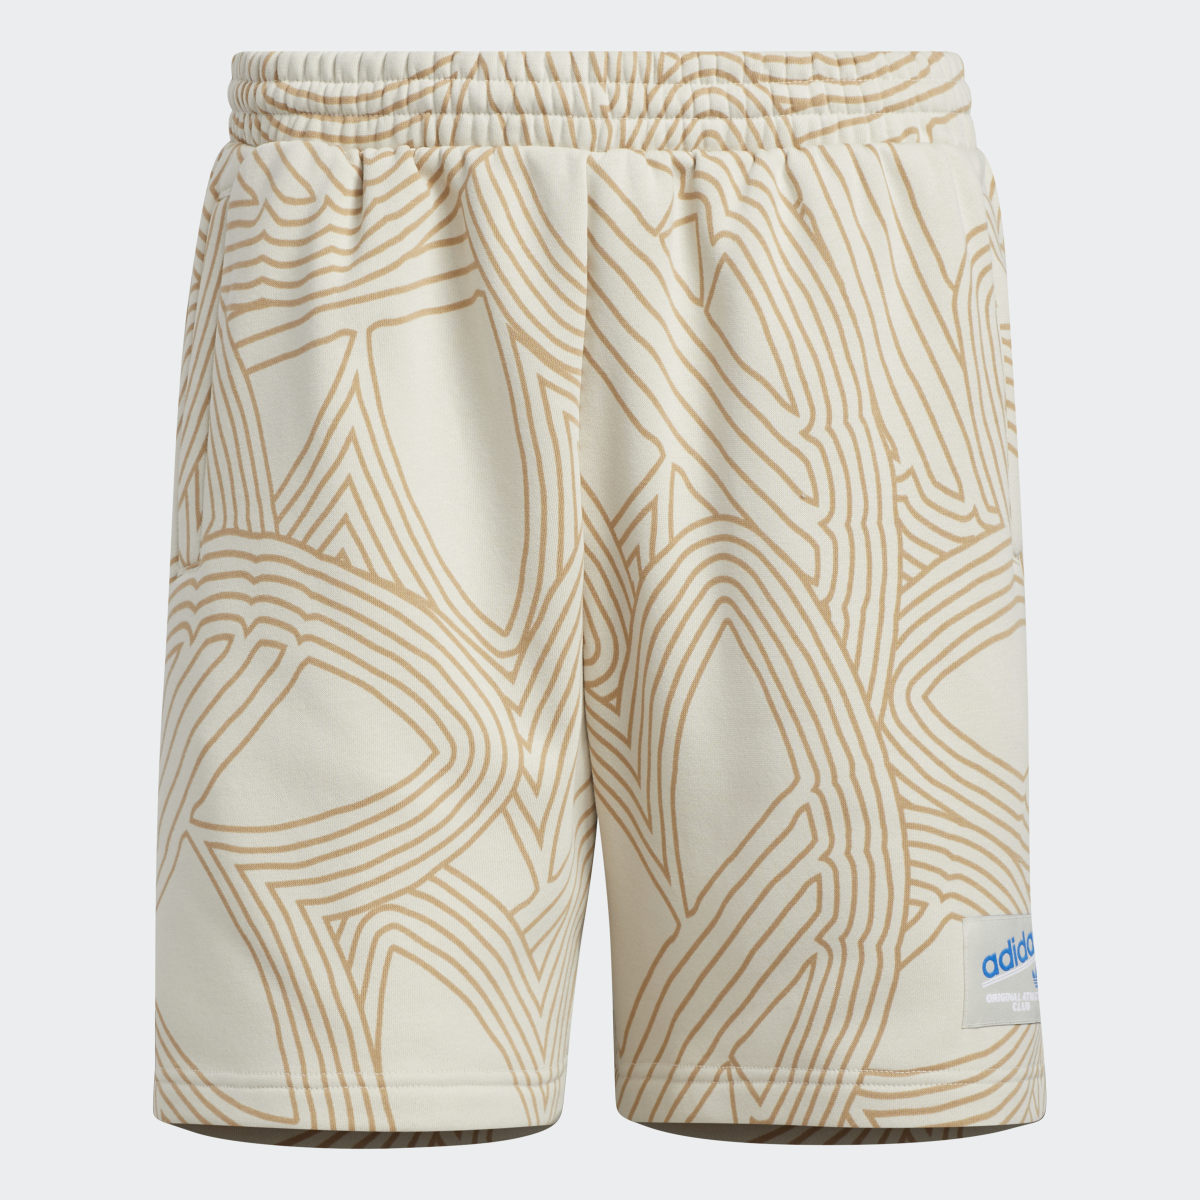 Adidas Original Athletic Club Allover Print Shorts. 4